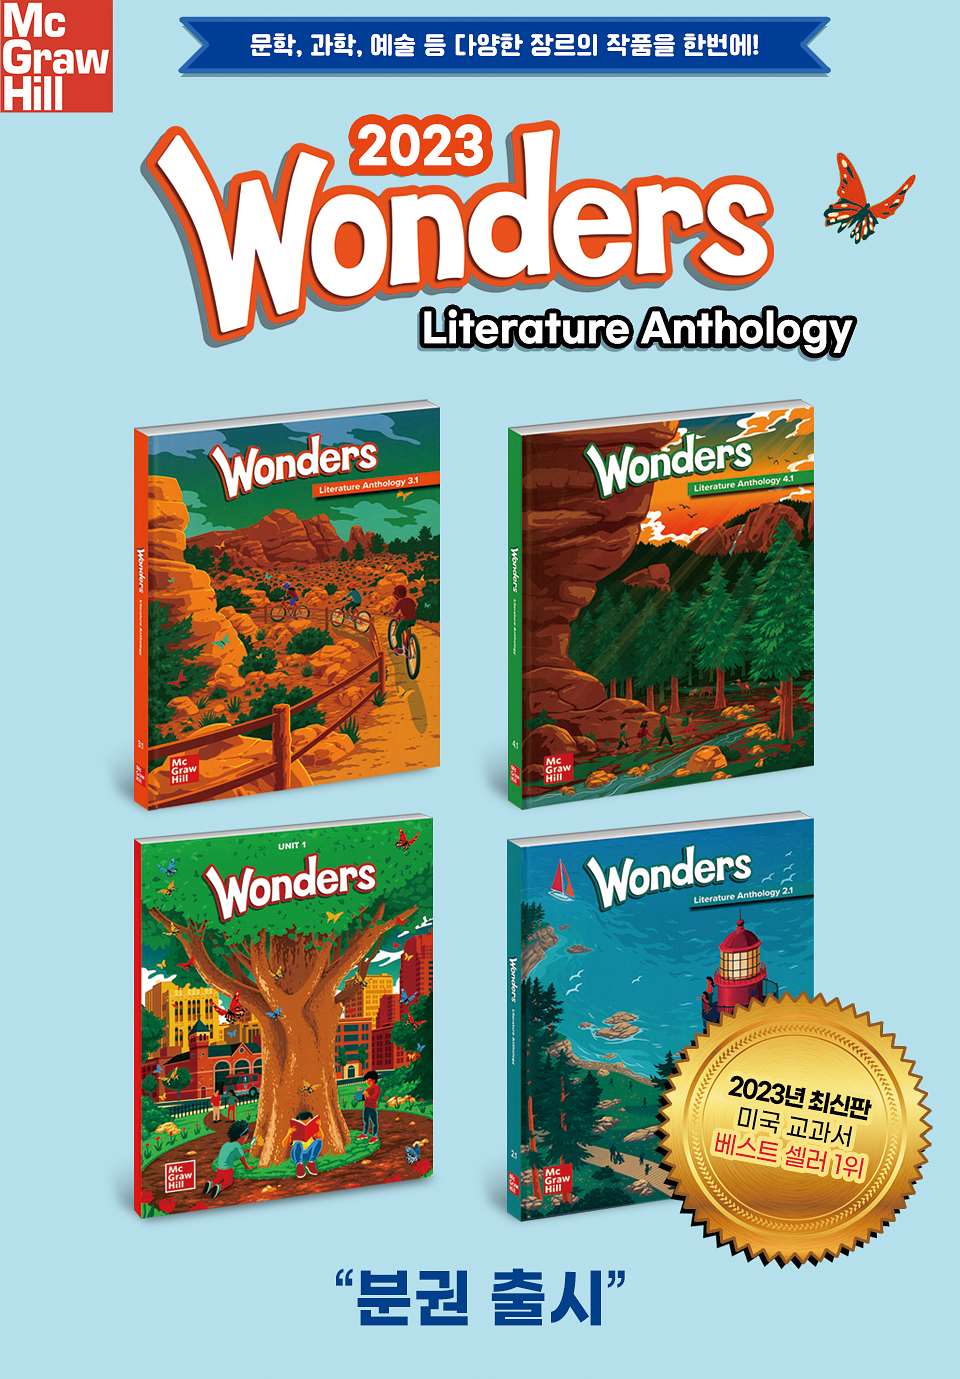 Wonders Literature Anthology 2023